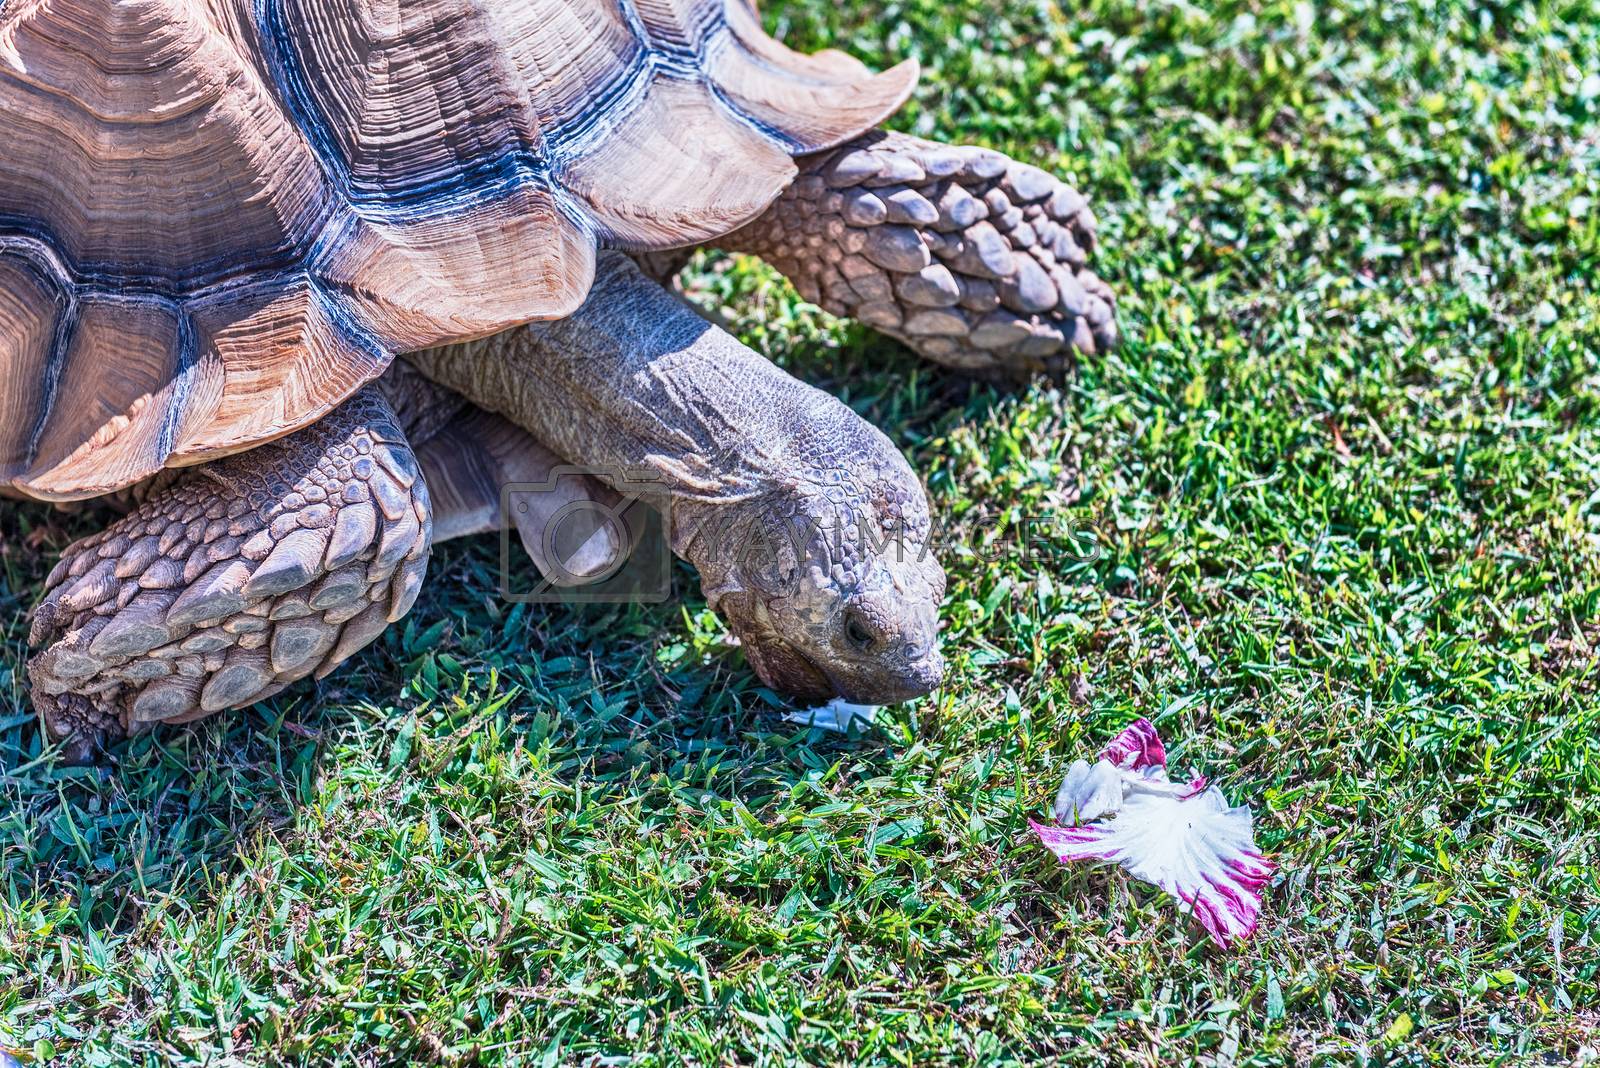 Royalty free image of African spurred tortoise aka sulcata tortoise eating chicory by marcorubino